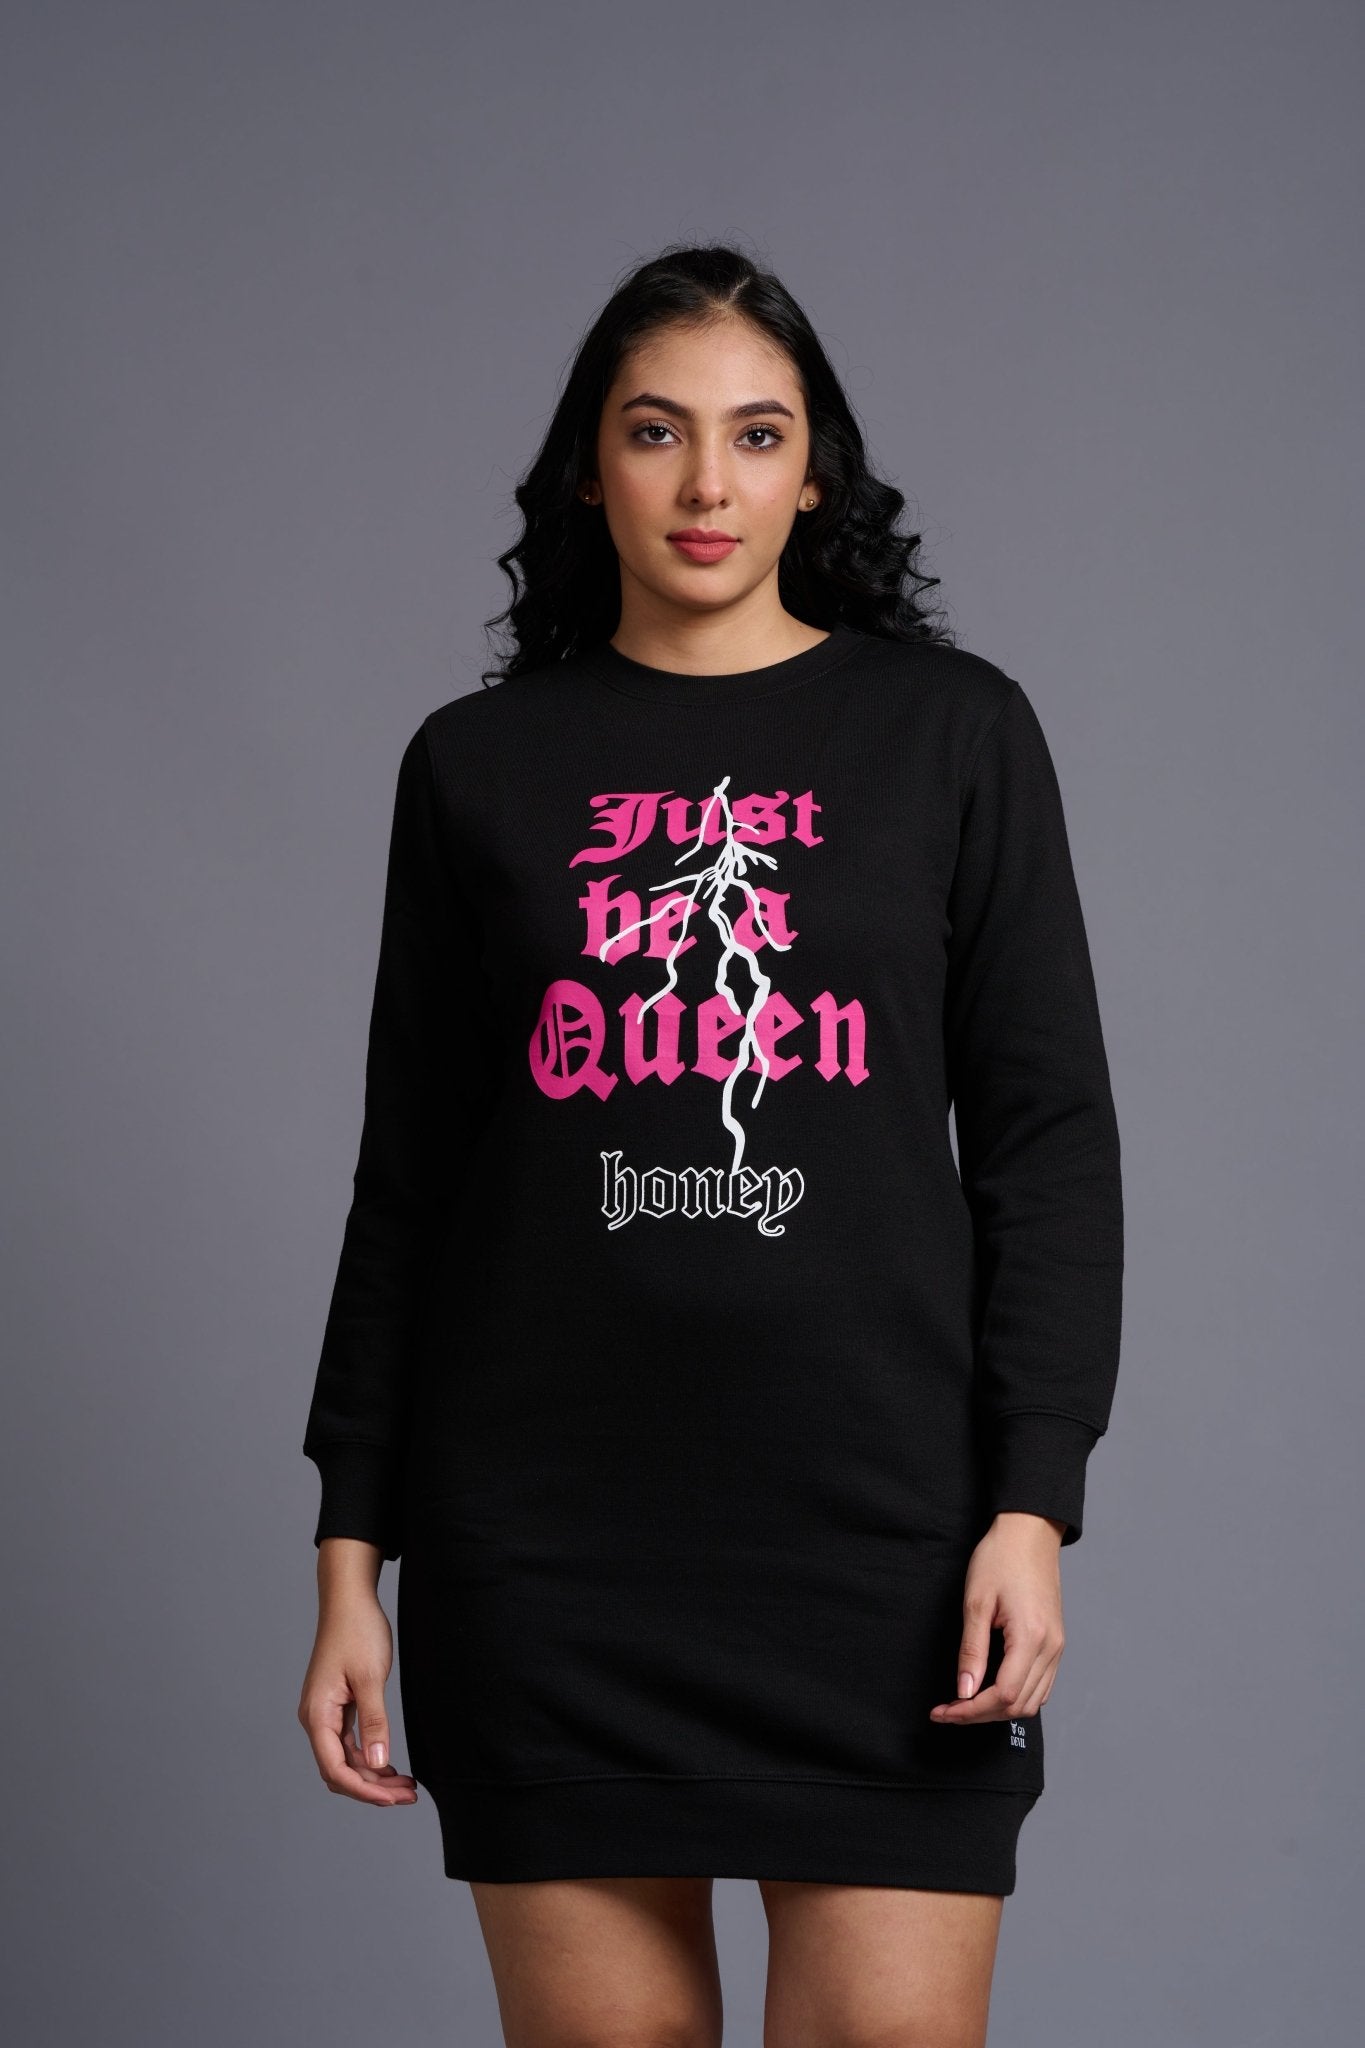 I m Queen Printed Black Sweatdress for Women - Go Devil